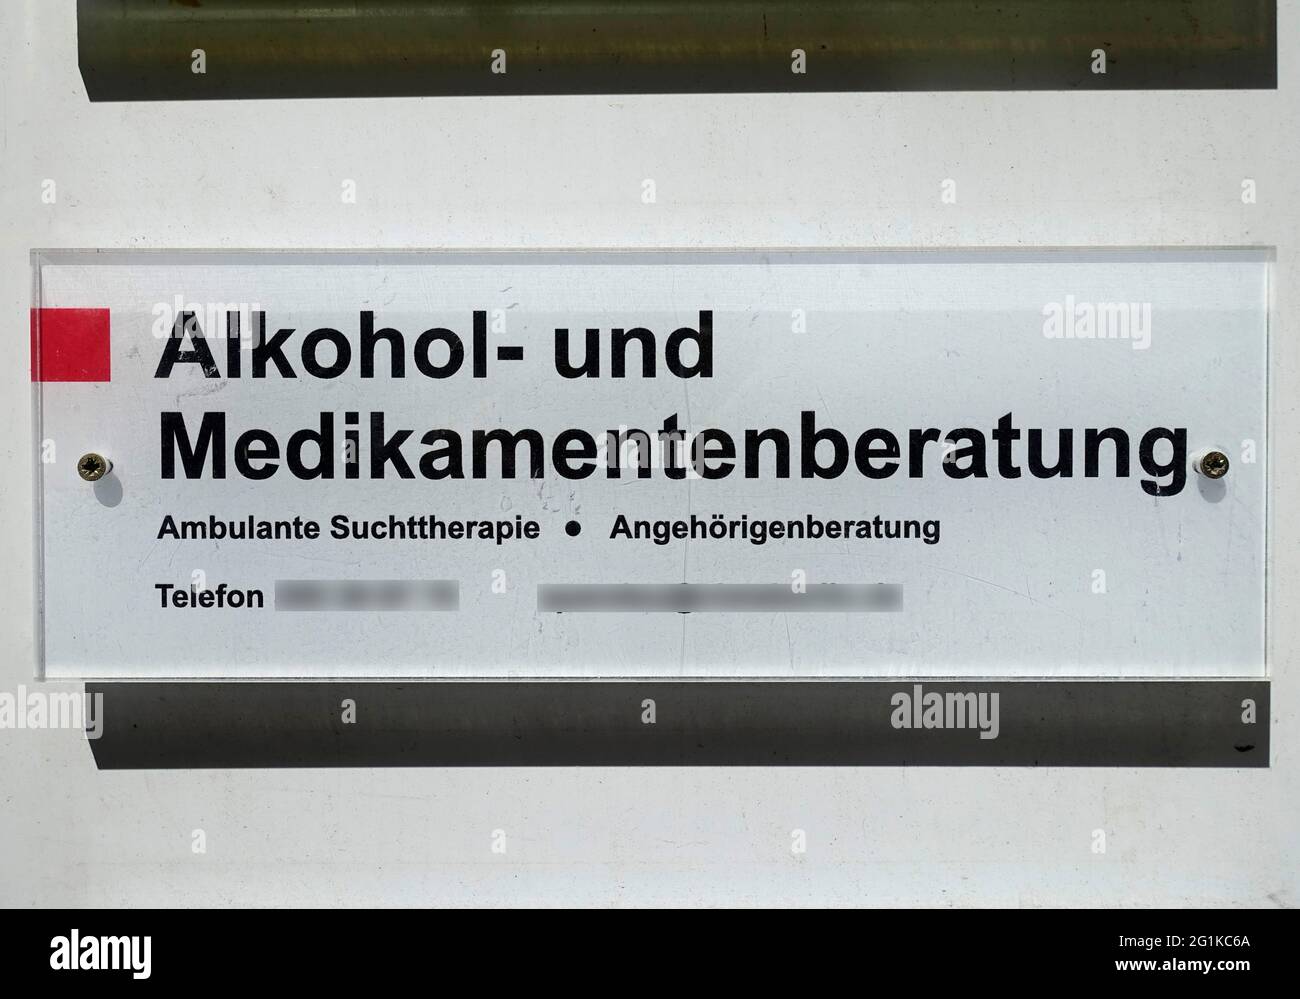 Alcohol and medication advice, Berlin, Germany Stock Photo